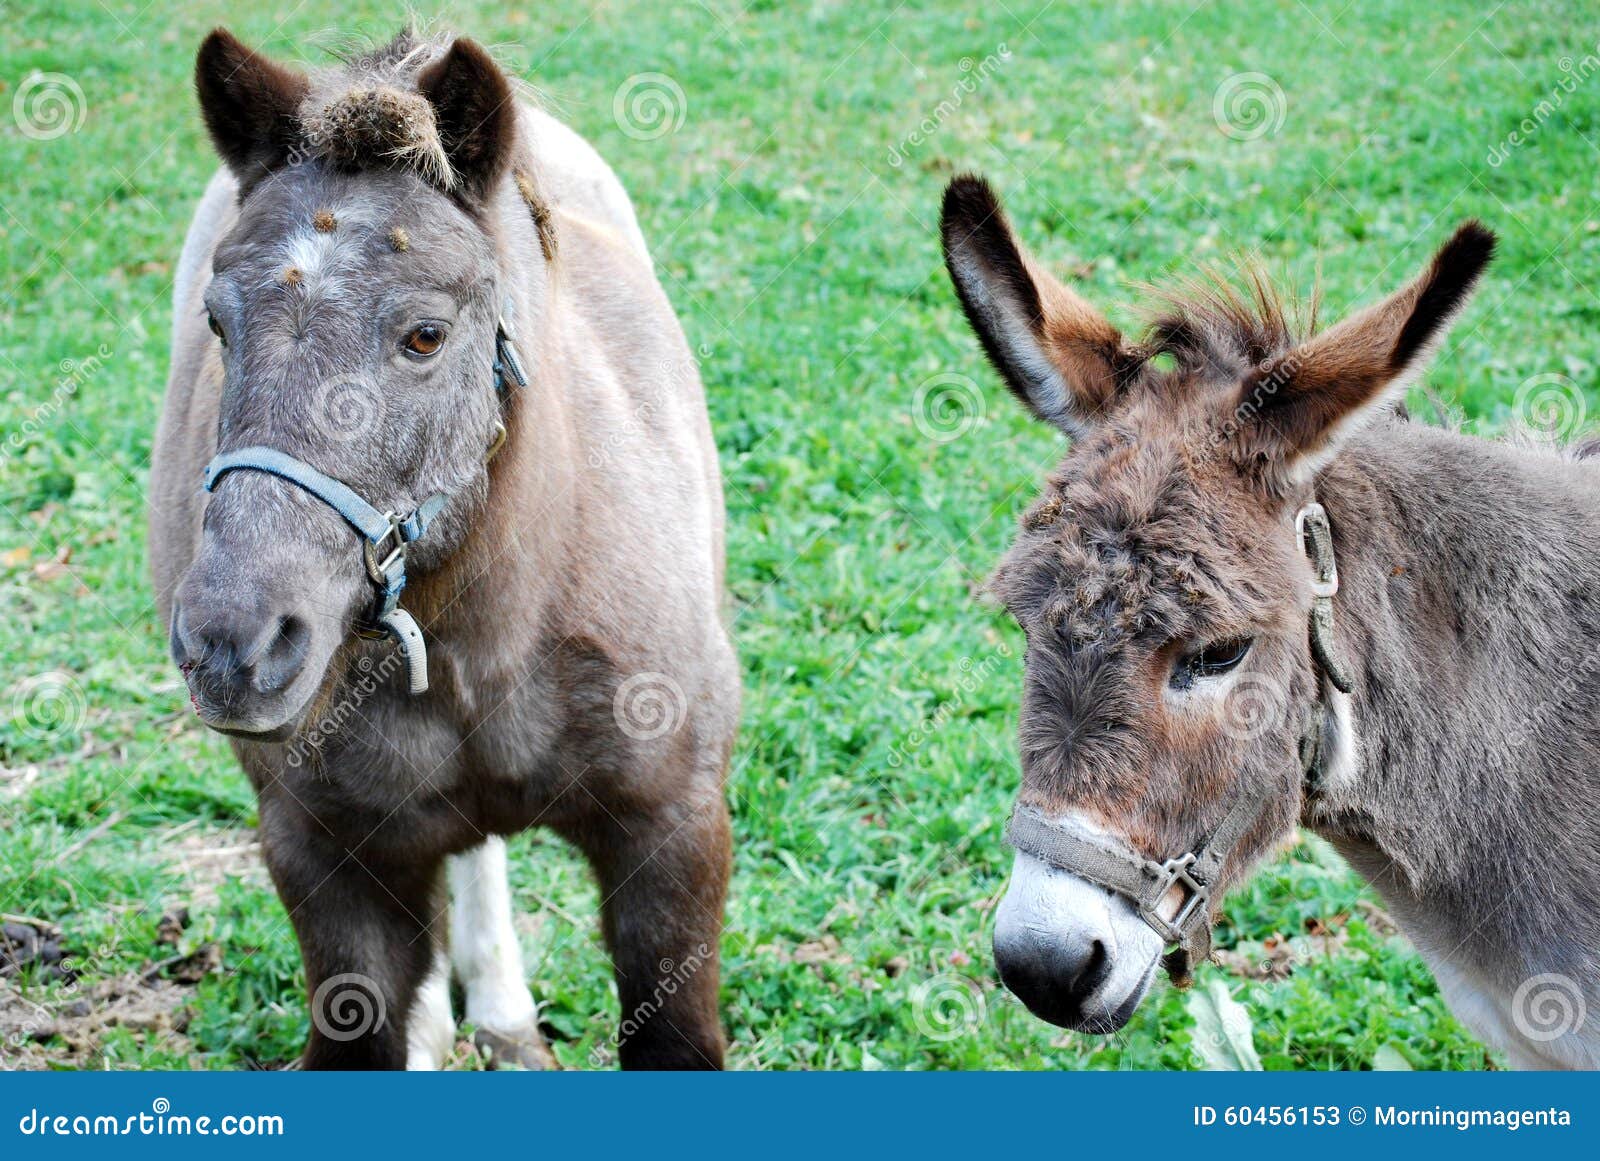 Pony and Burro stock image. Image of grass, grassy, burro - 60456153